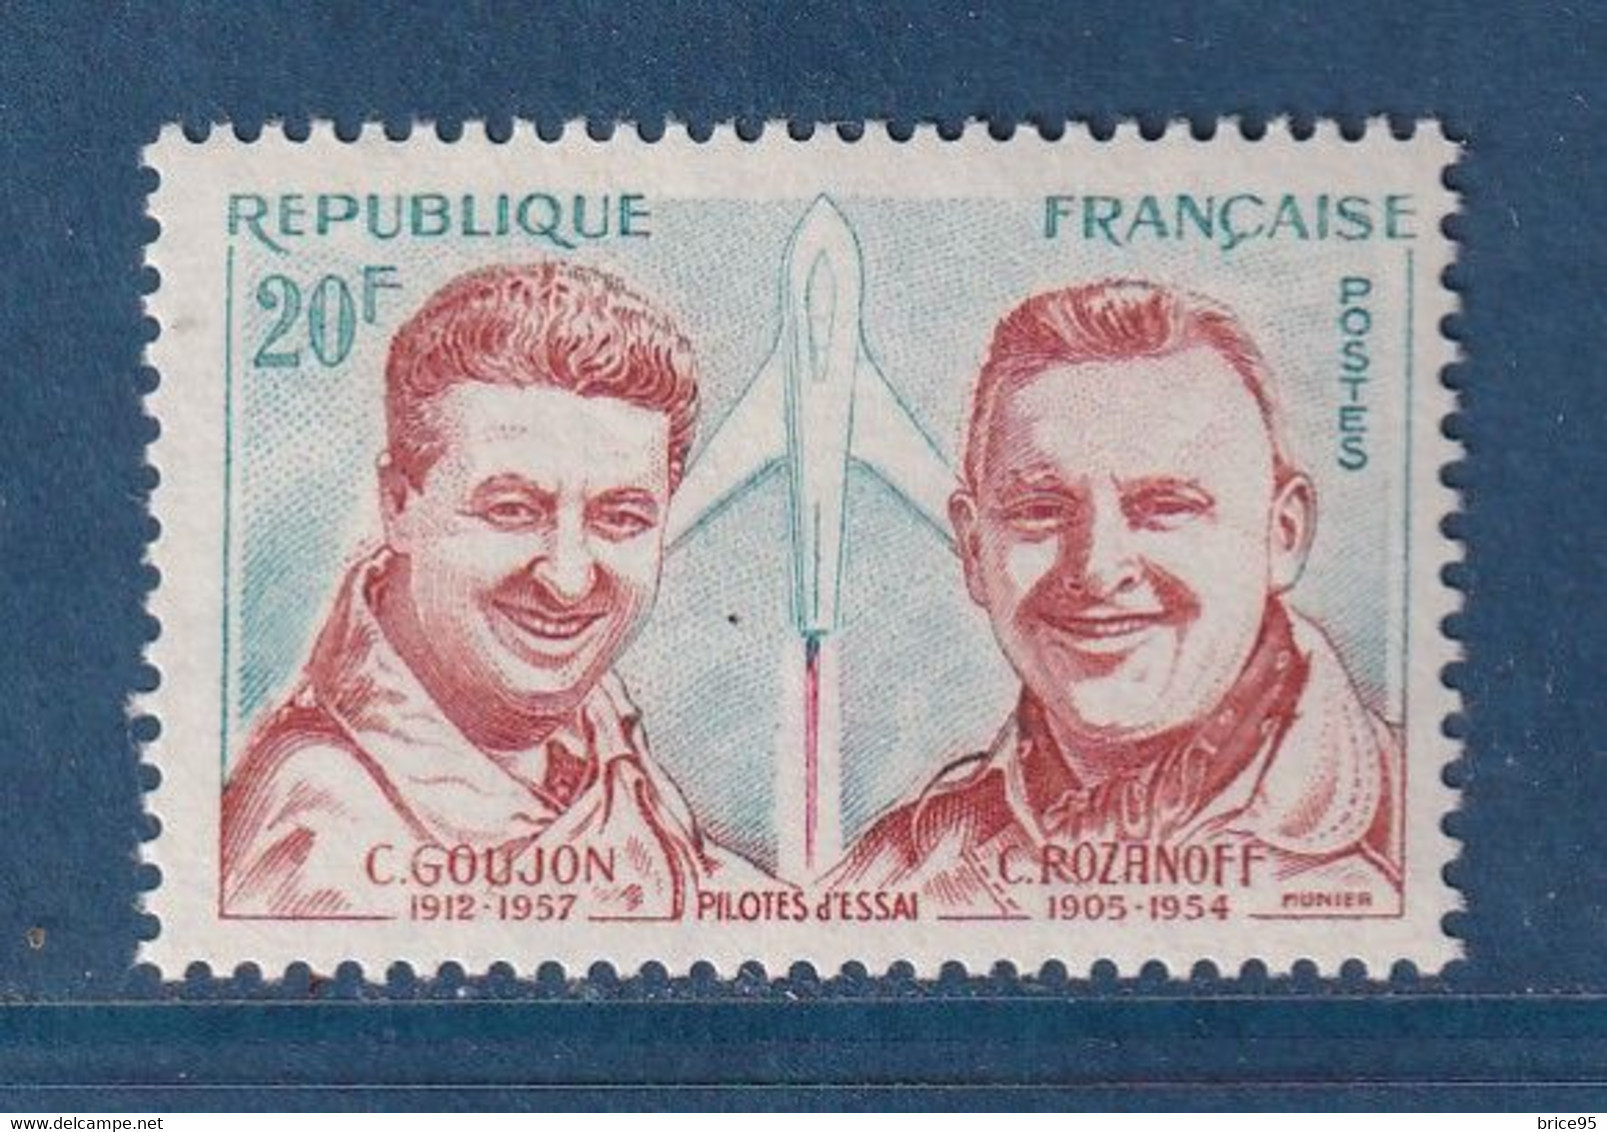 France - YT Nº 1213 ** - Neuf Sans Charnière - 1959 - Neufs